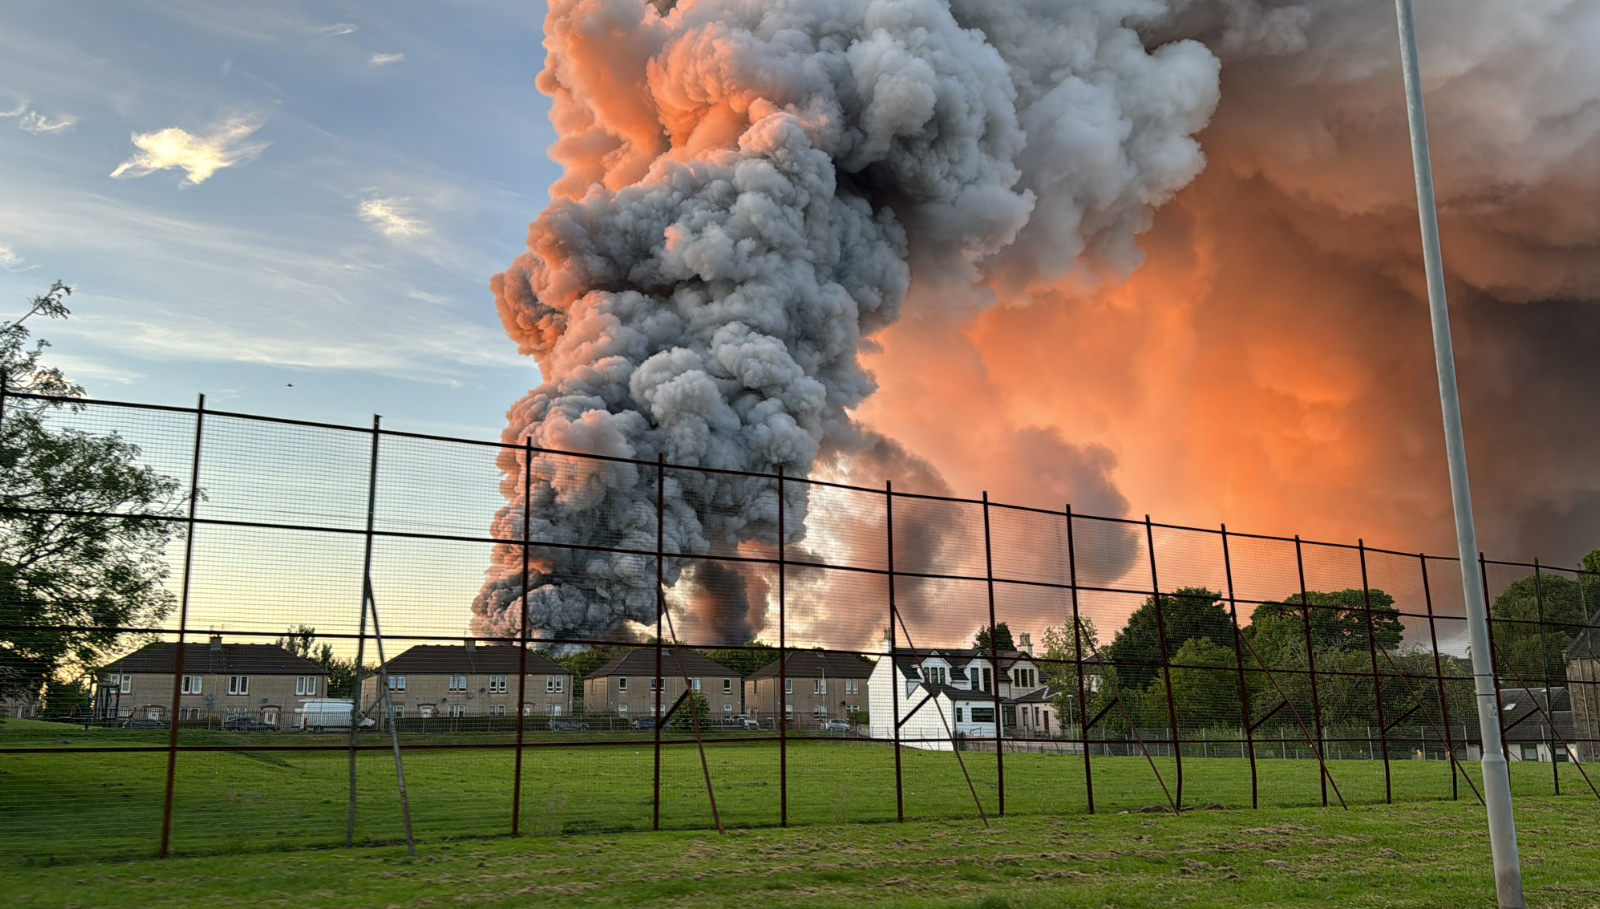 Enorme columna de humo causó explosión en zona industrial de Escocia (video)